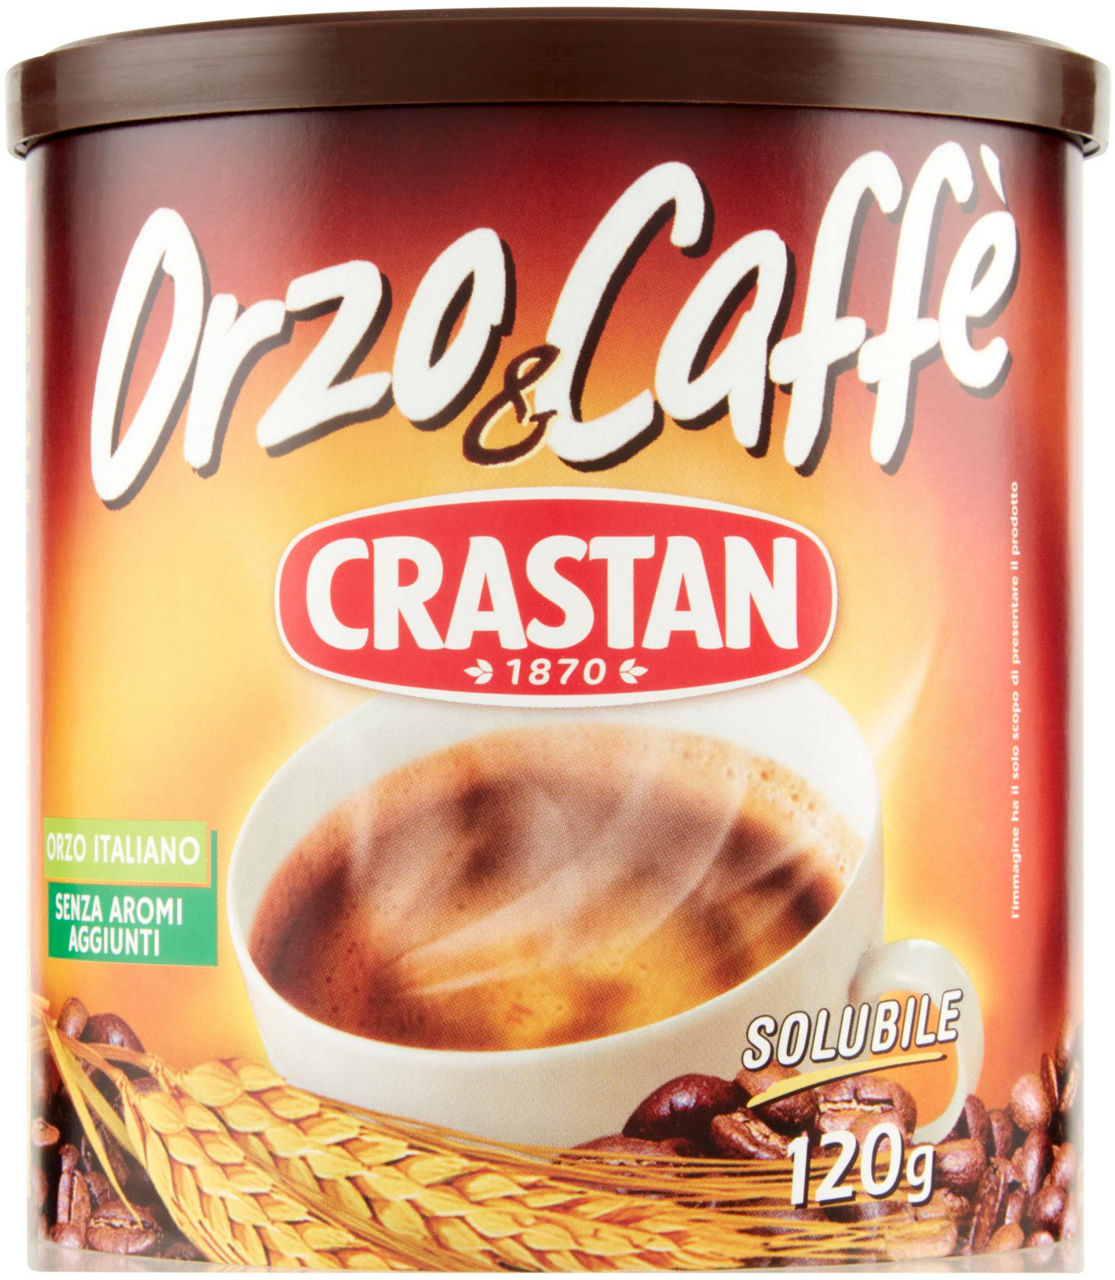 Orzo & caffe' solubile crastan barattolo gr.120